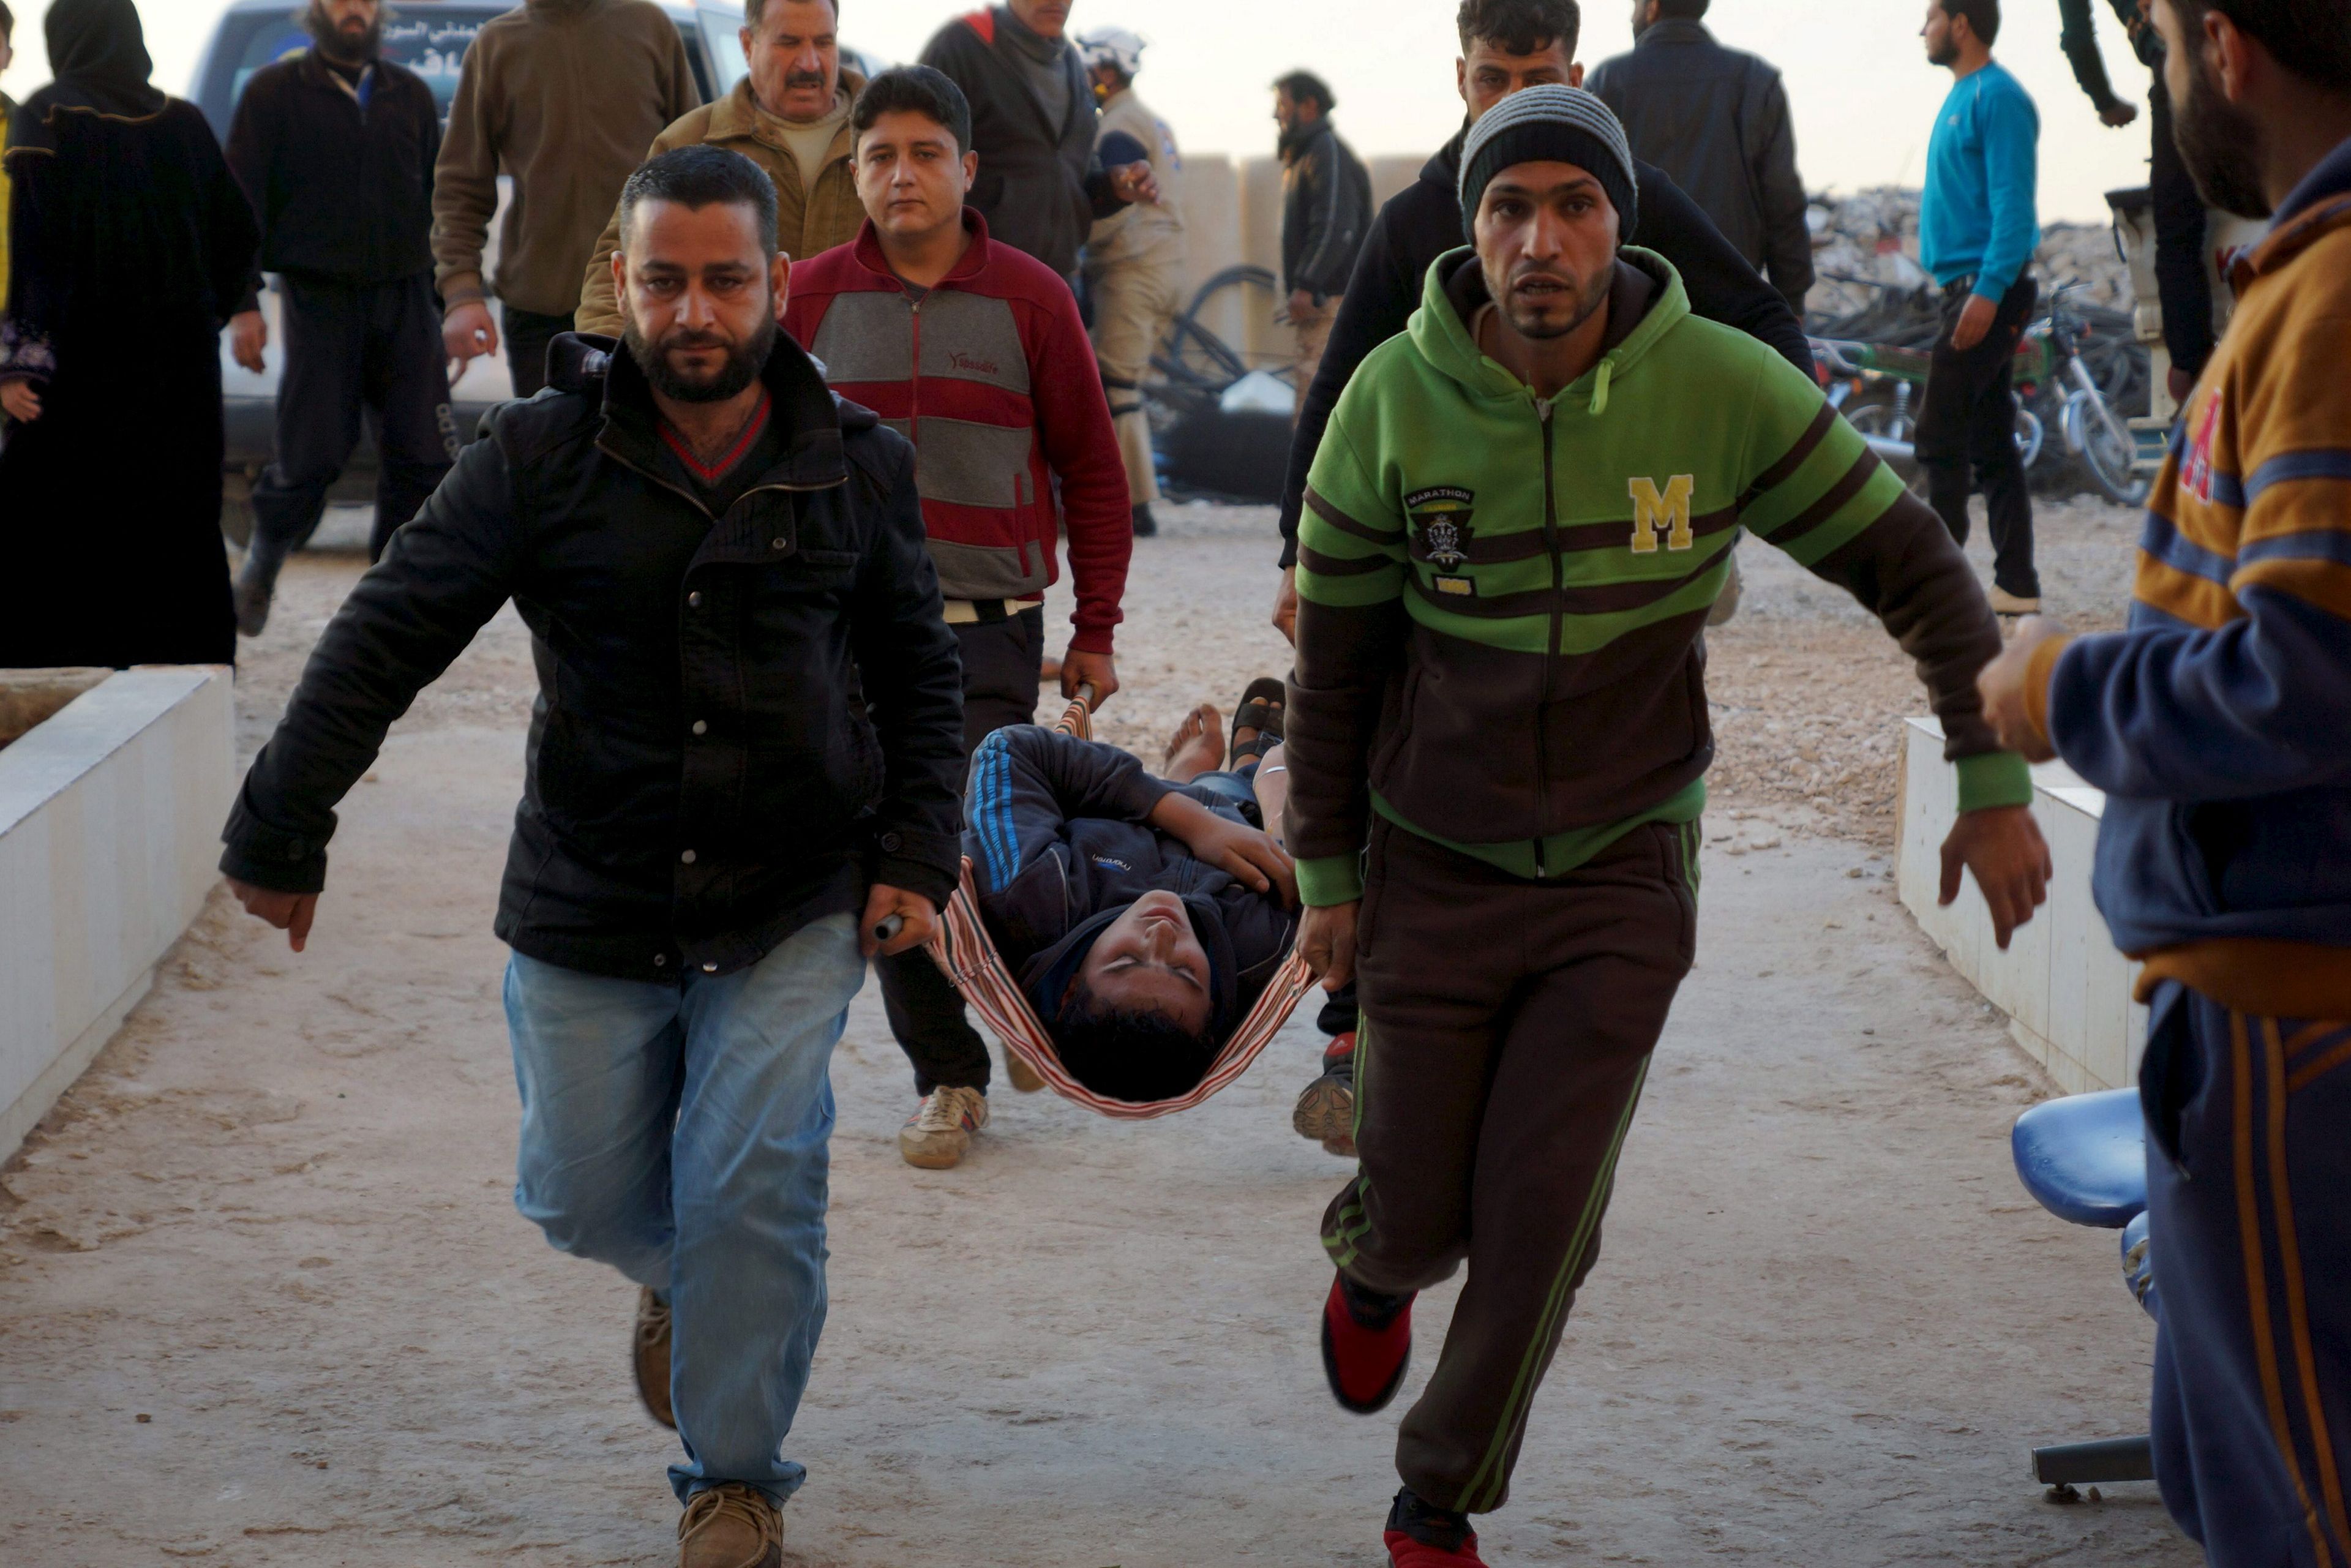 Imagen de 2015 de la guerra en Siria: 2 hombres transportan a una persona herida.